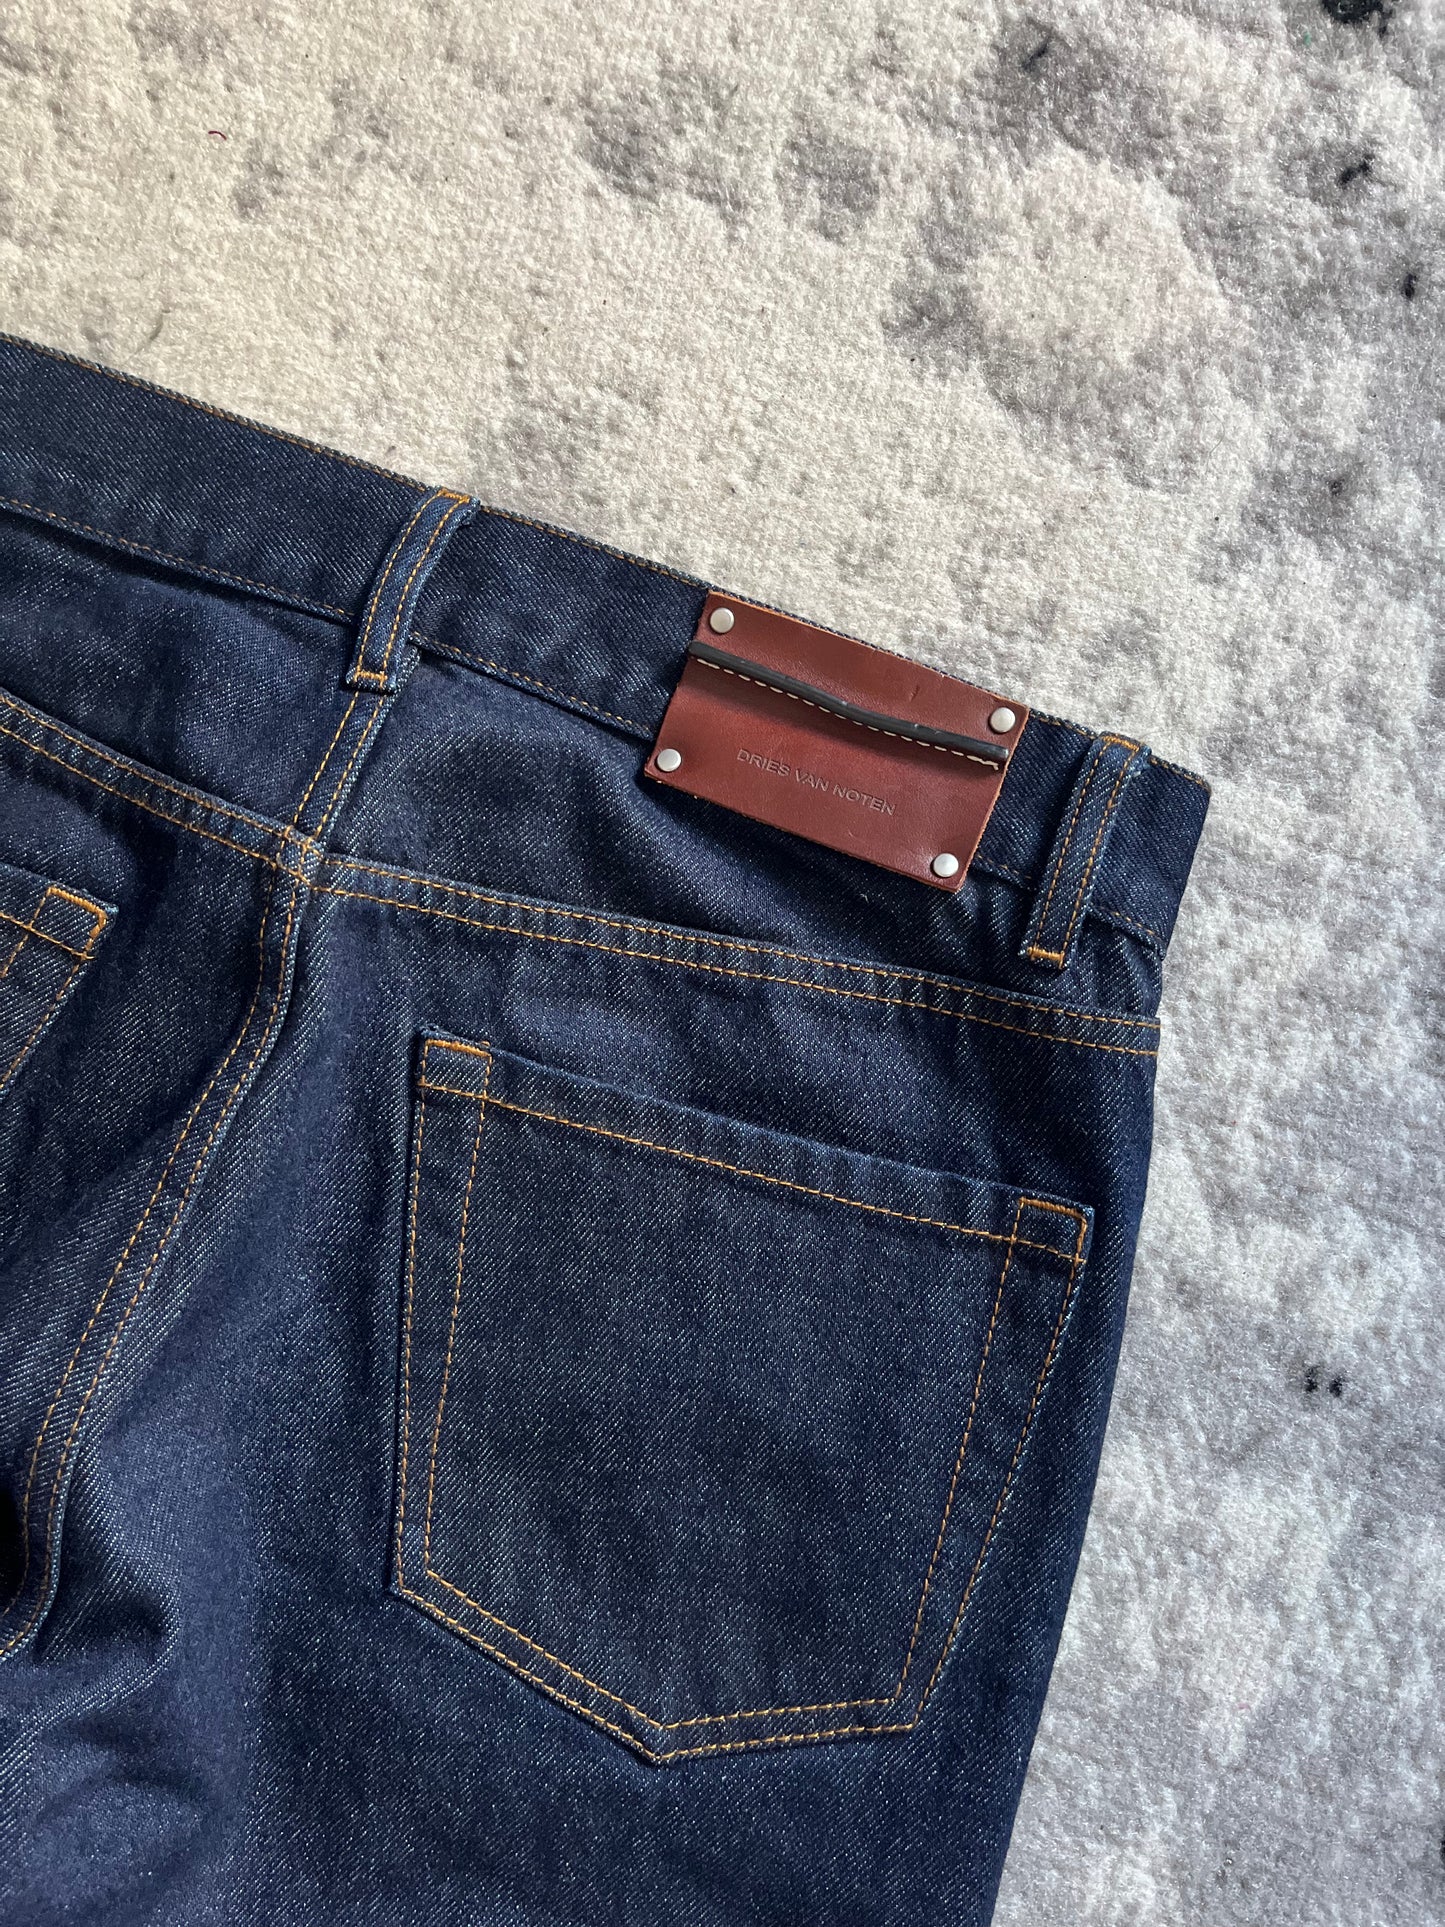 Dries Van Noten Electric Puffer Brut Denim Jeans (S/M)